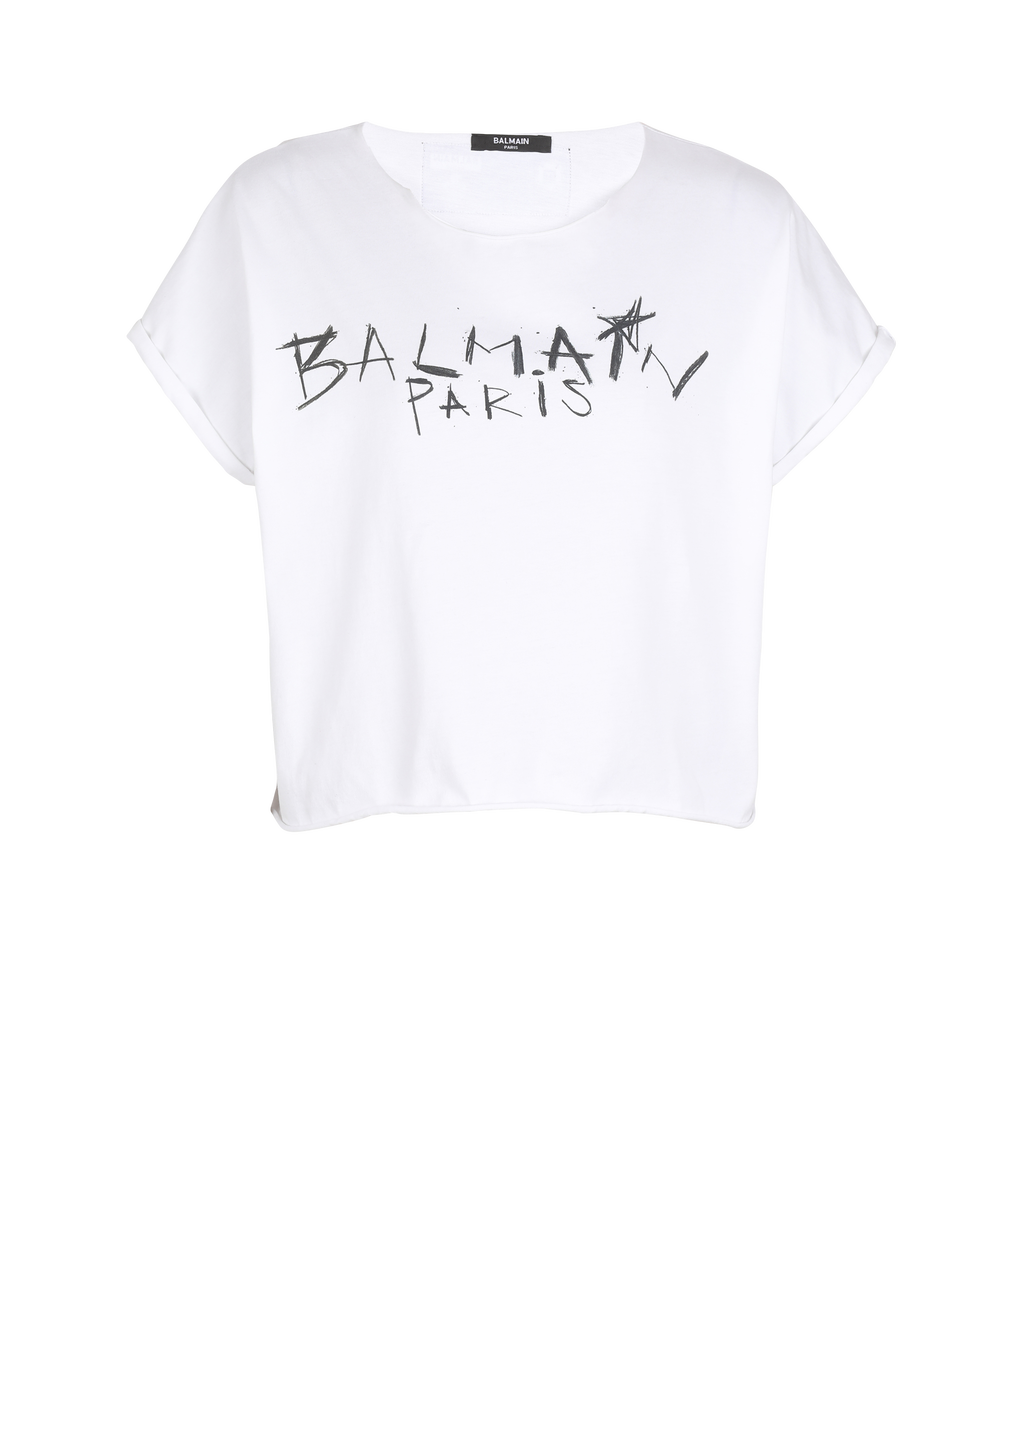 T-shirt court en coton imprimé graffiti Balmain, blanc, hi-res